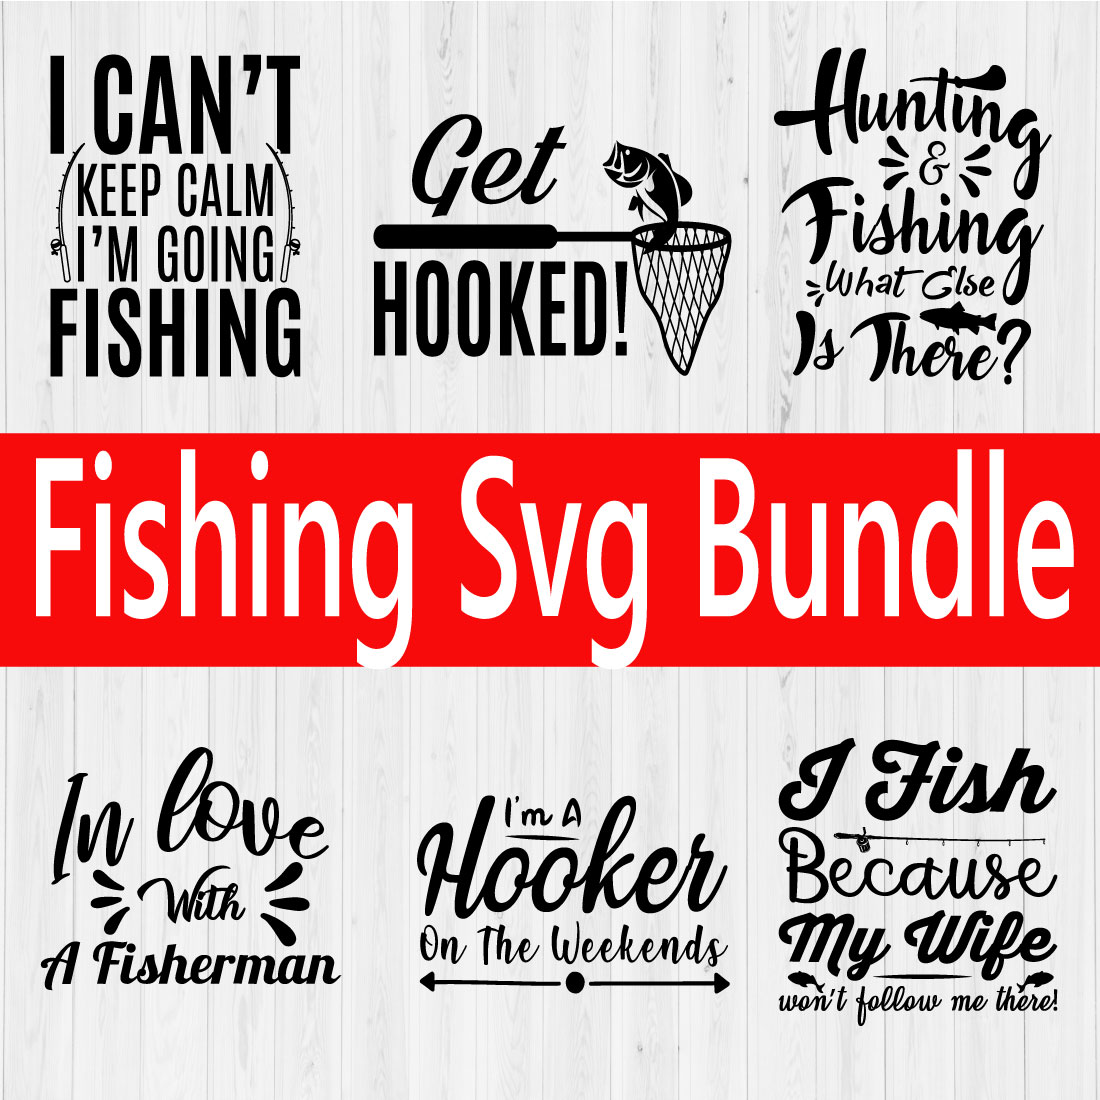 Fishing Svg Bundle vol8 cover image.